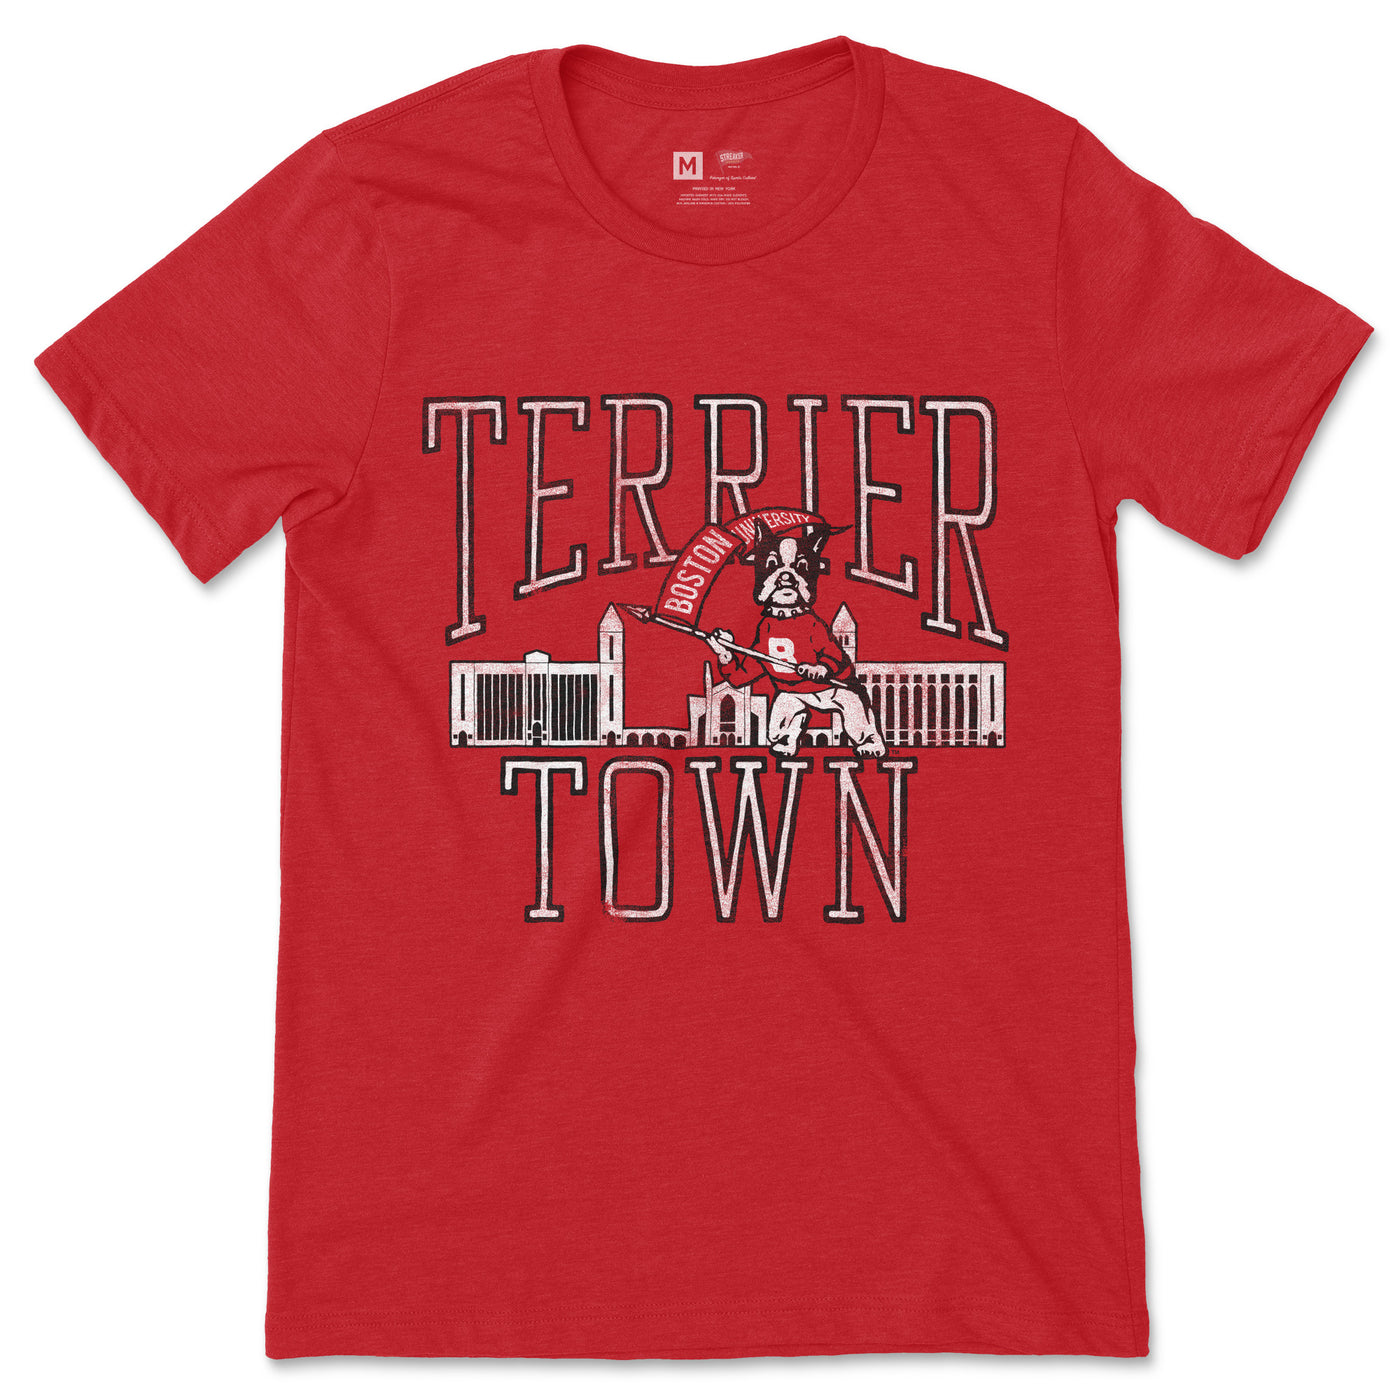 Boston University Terrier Town Tee - Streaker Sports